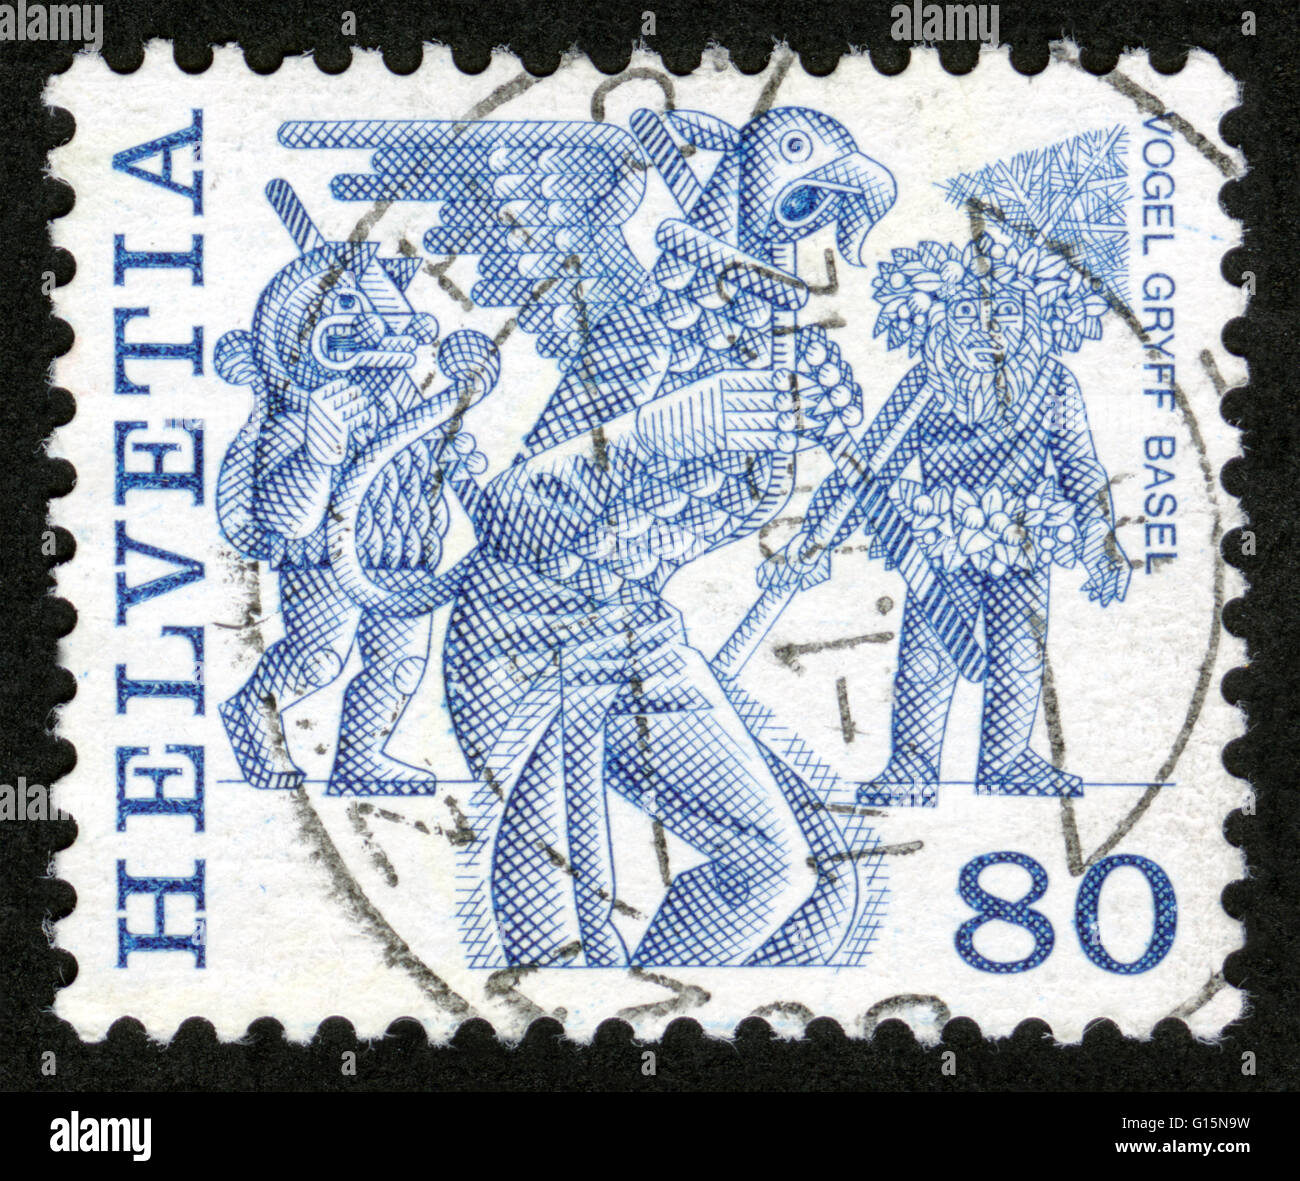 La Svizzera, Helvetia, francobollo, post mark, Foto Stock